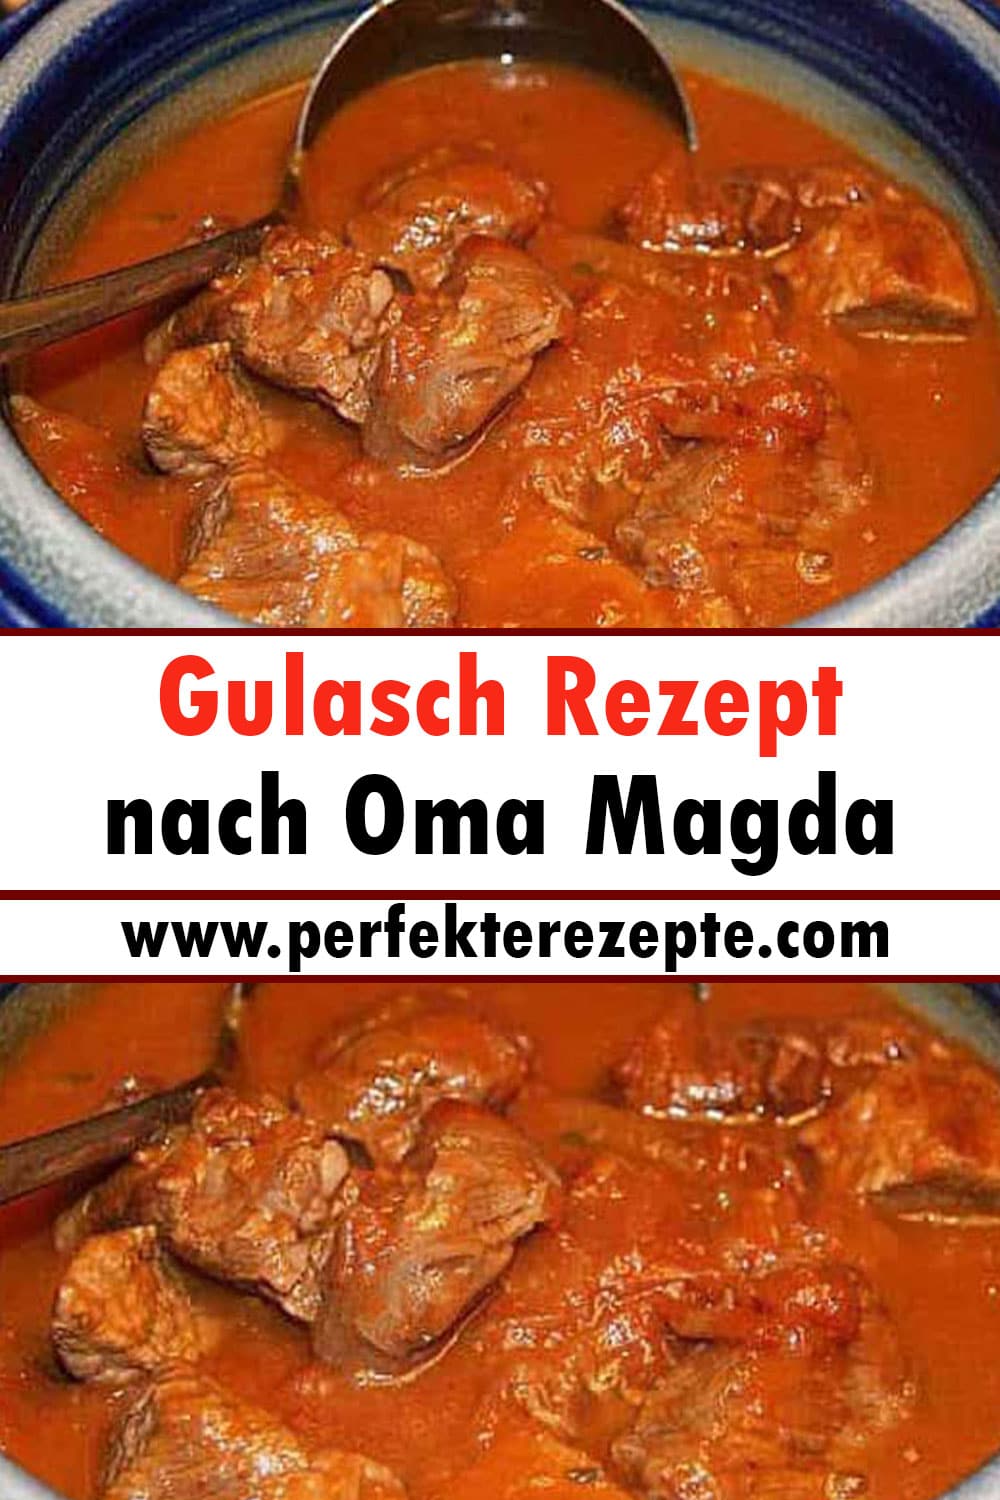 Gulasch Rezept nach Oma Magda